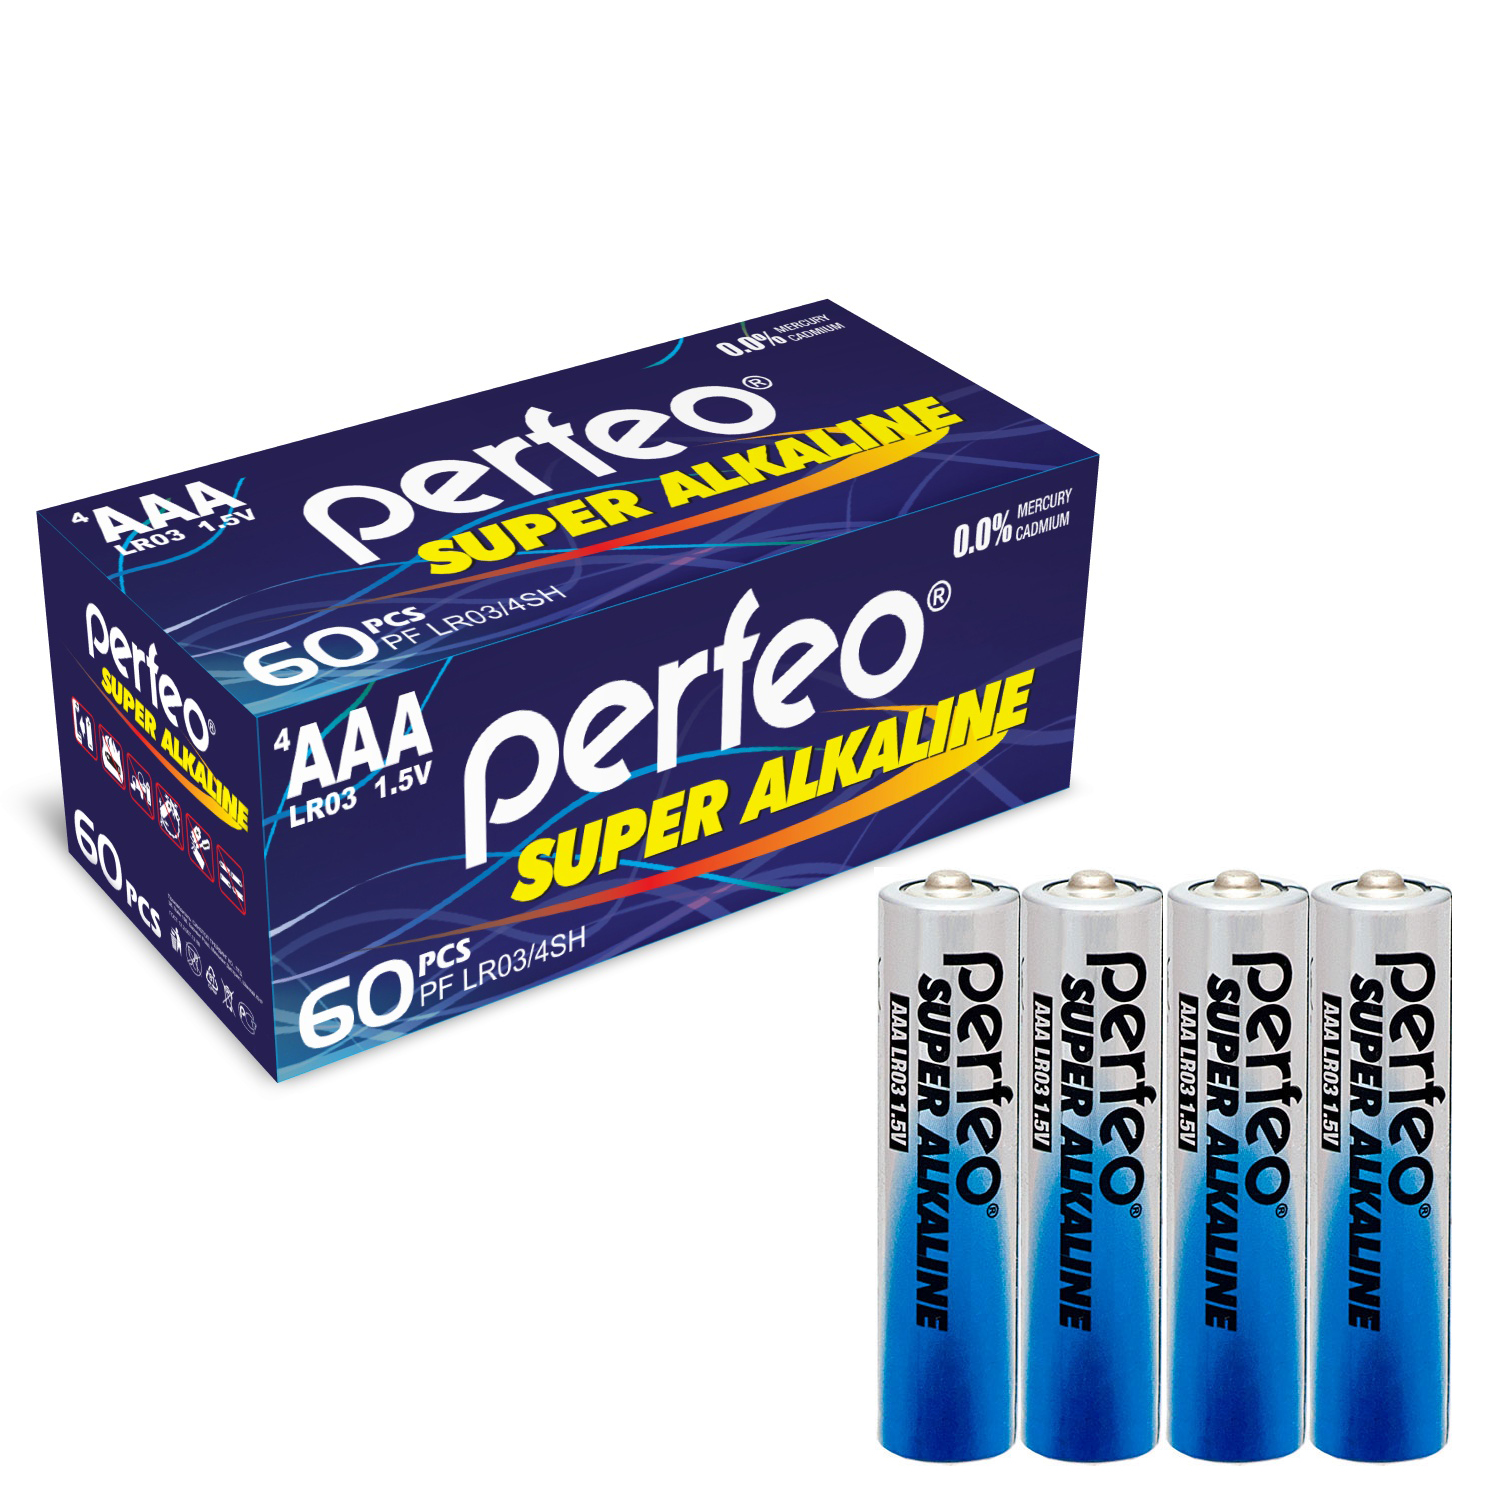 Батарейка Perfeo LR03/4SH Super Alkaline 60 шт батарейки perfeo lr03 40 шт super alkaline